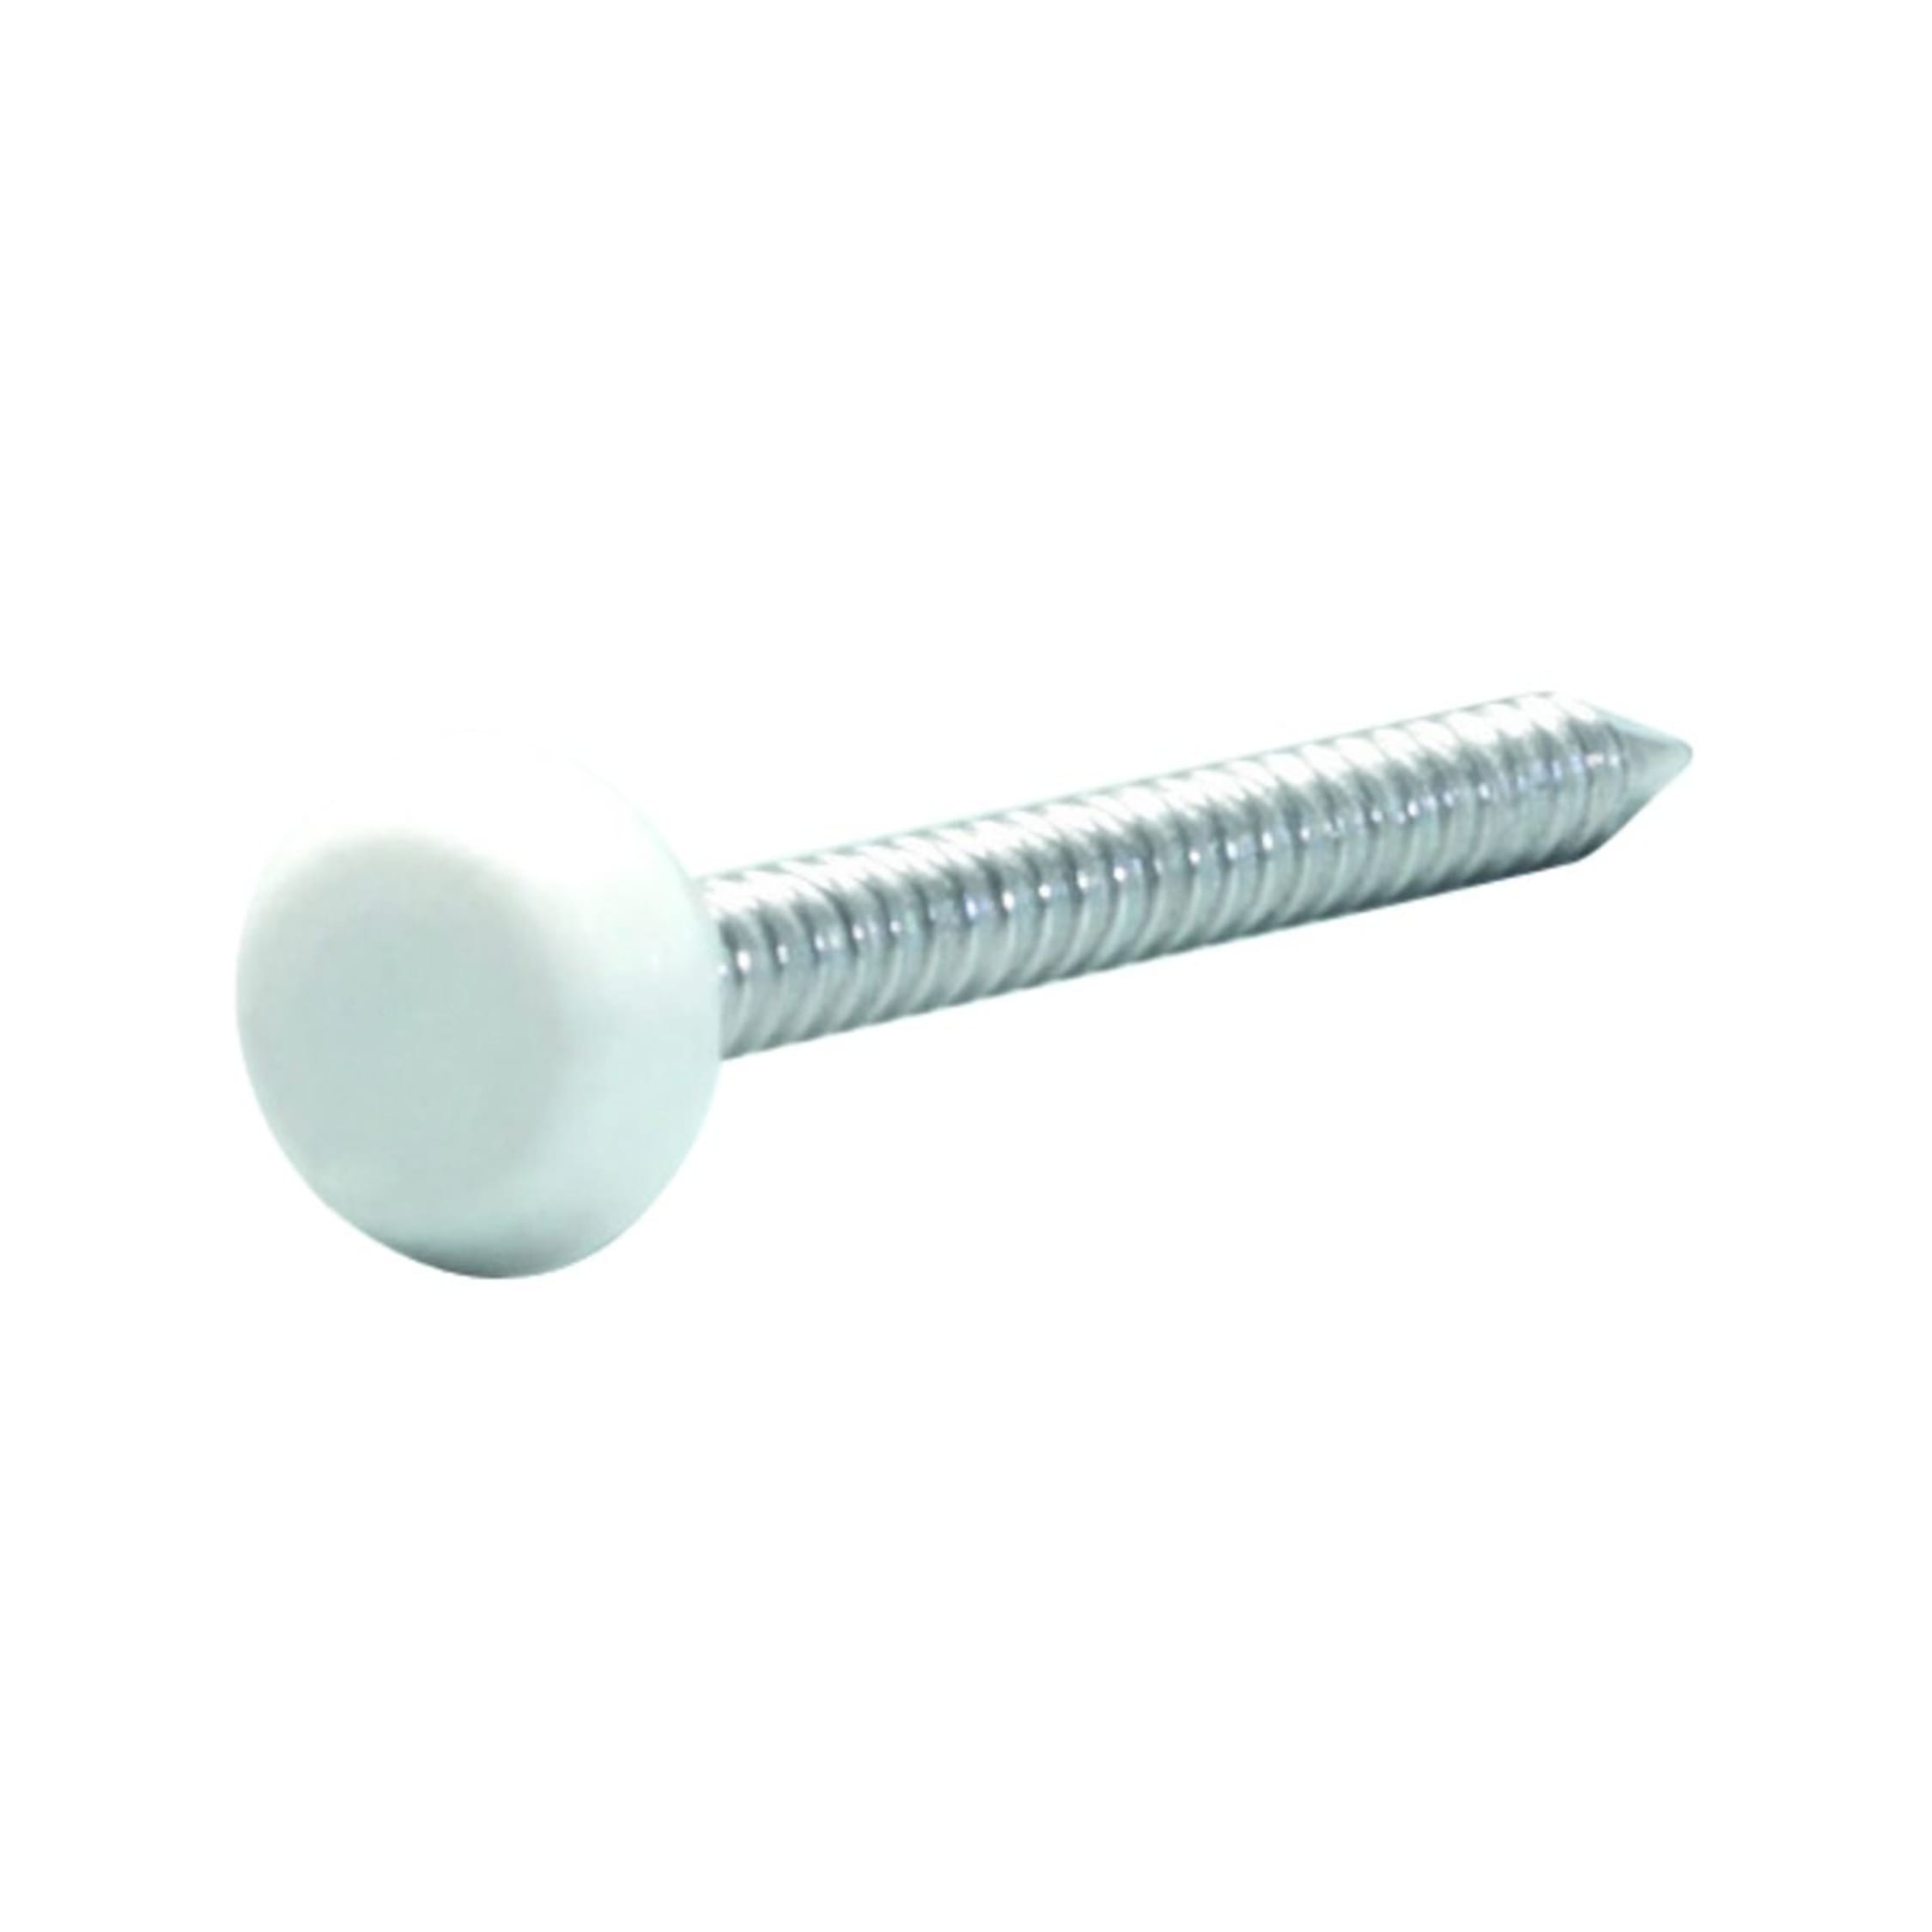 50 x Plastic Top Pins WHITE 3mm x 50mm LONG Polytop Nails Fixings Fascia/Soffit 